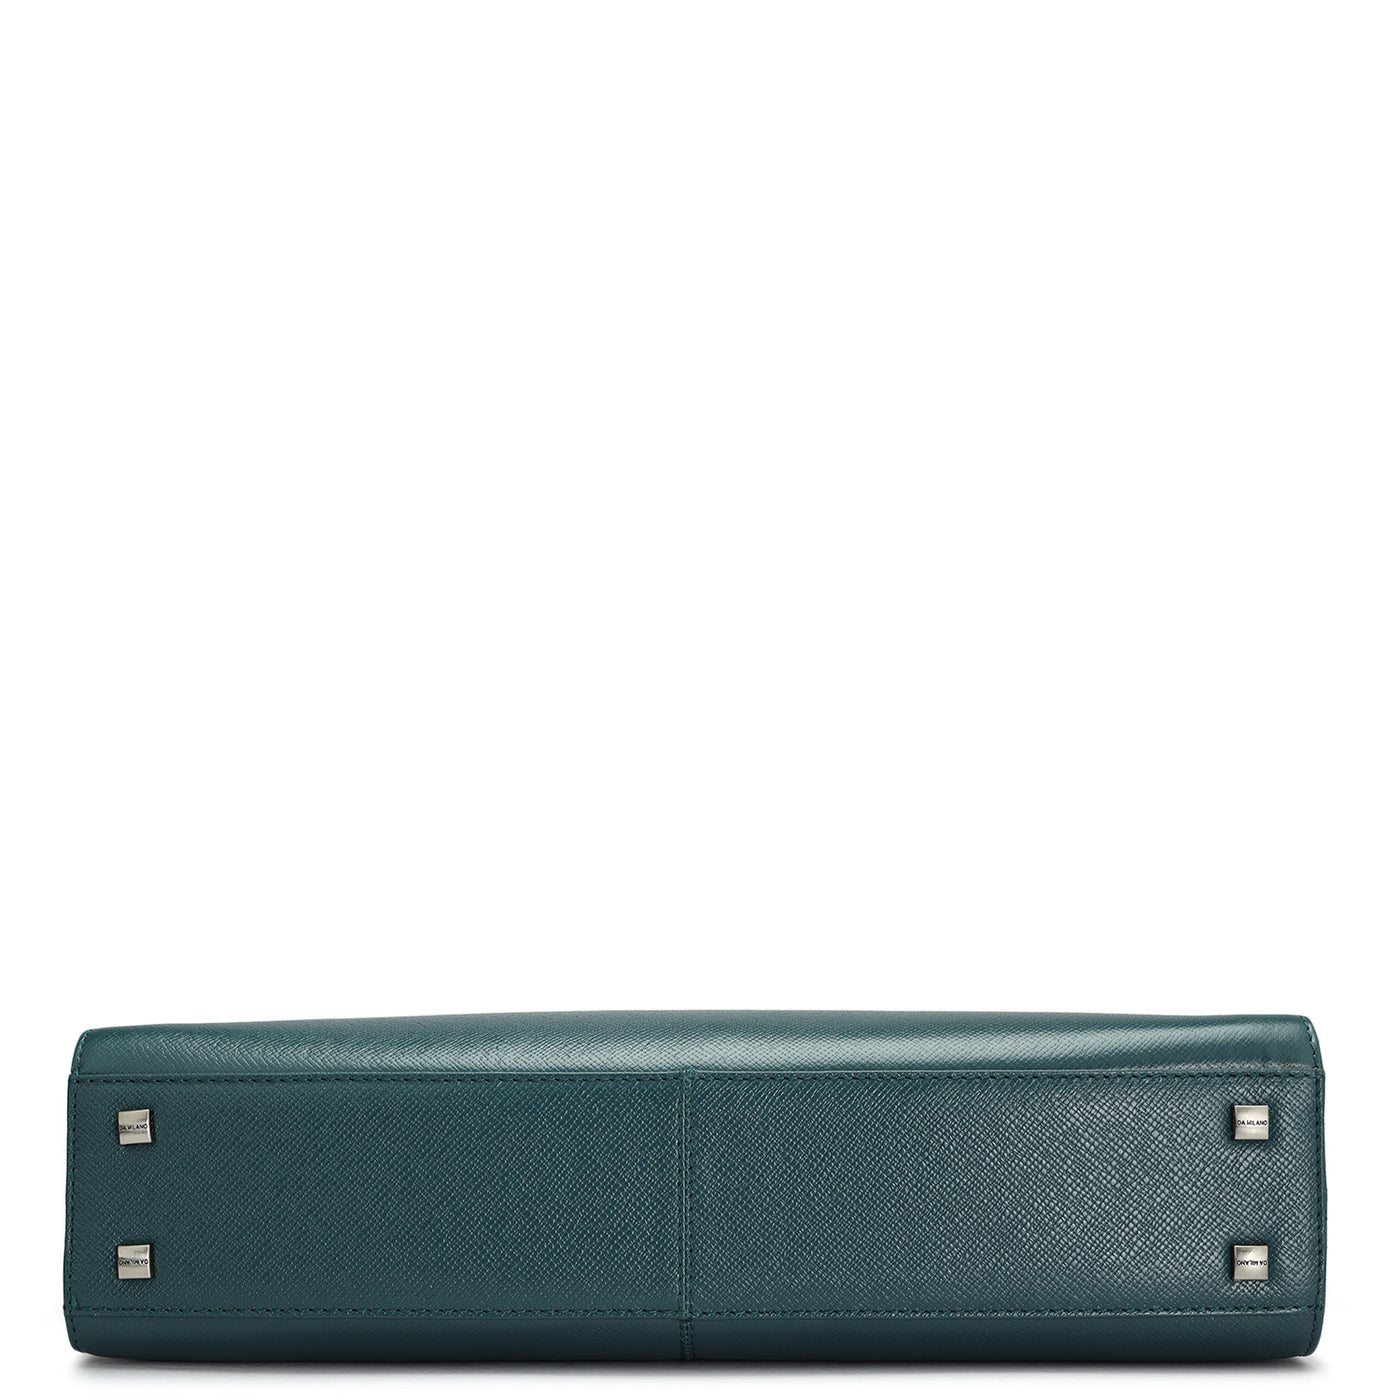 Octane Franzy Leather Laptop Bag - Upto 15"